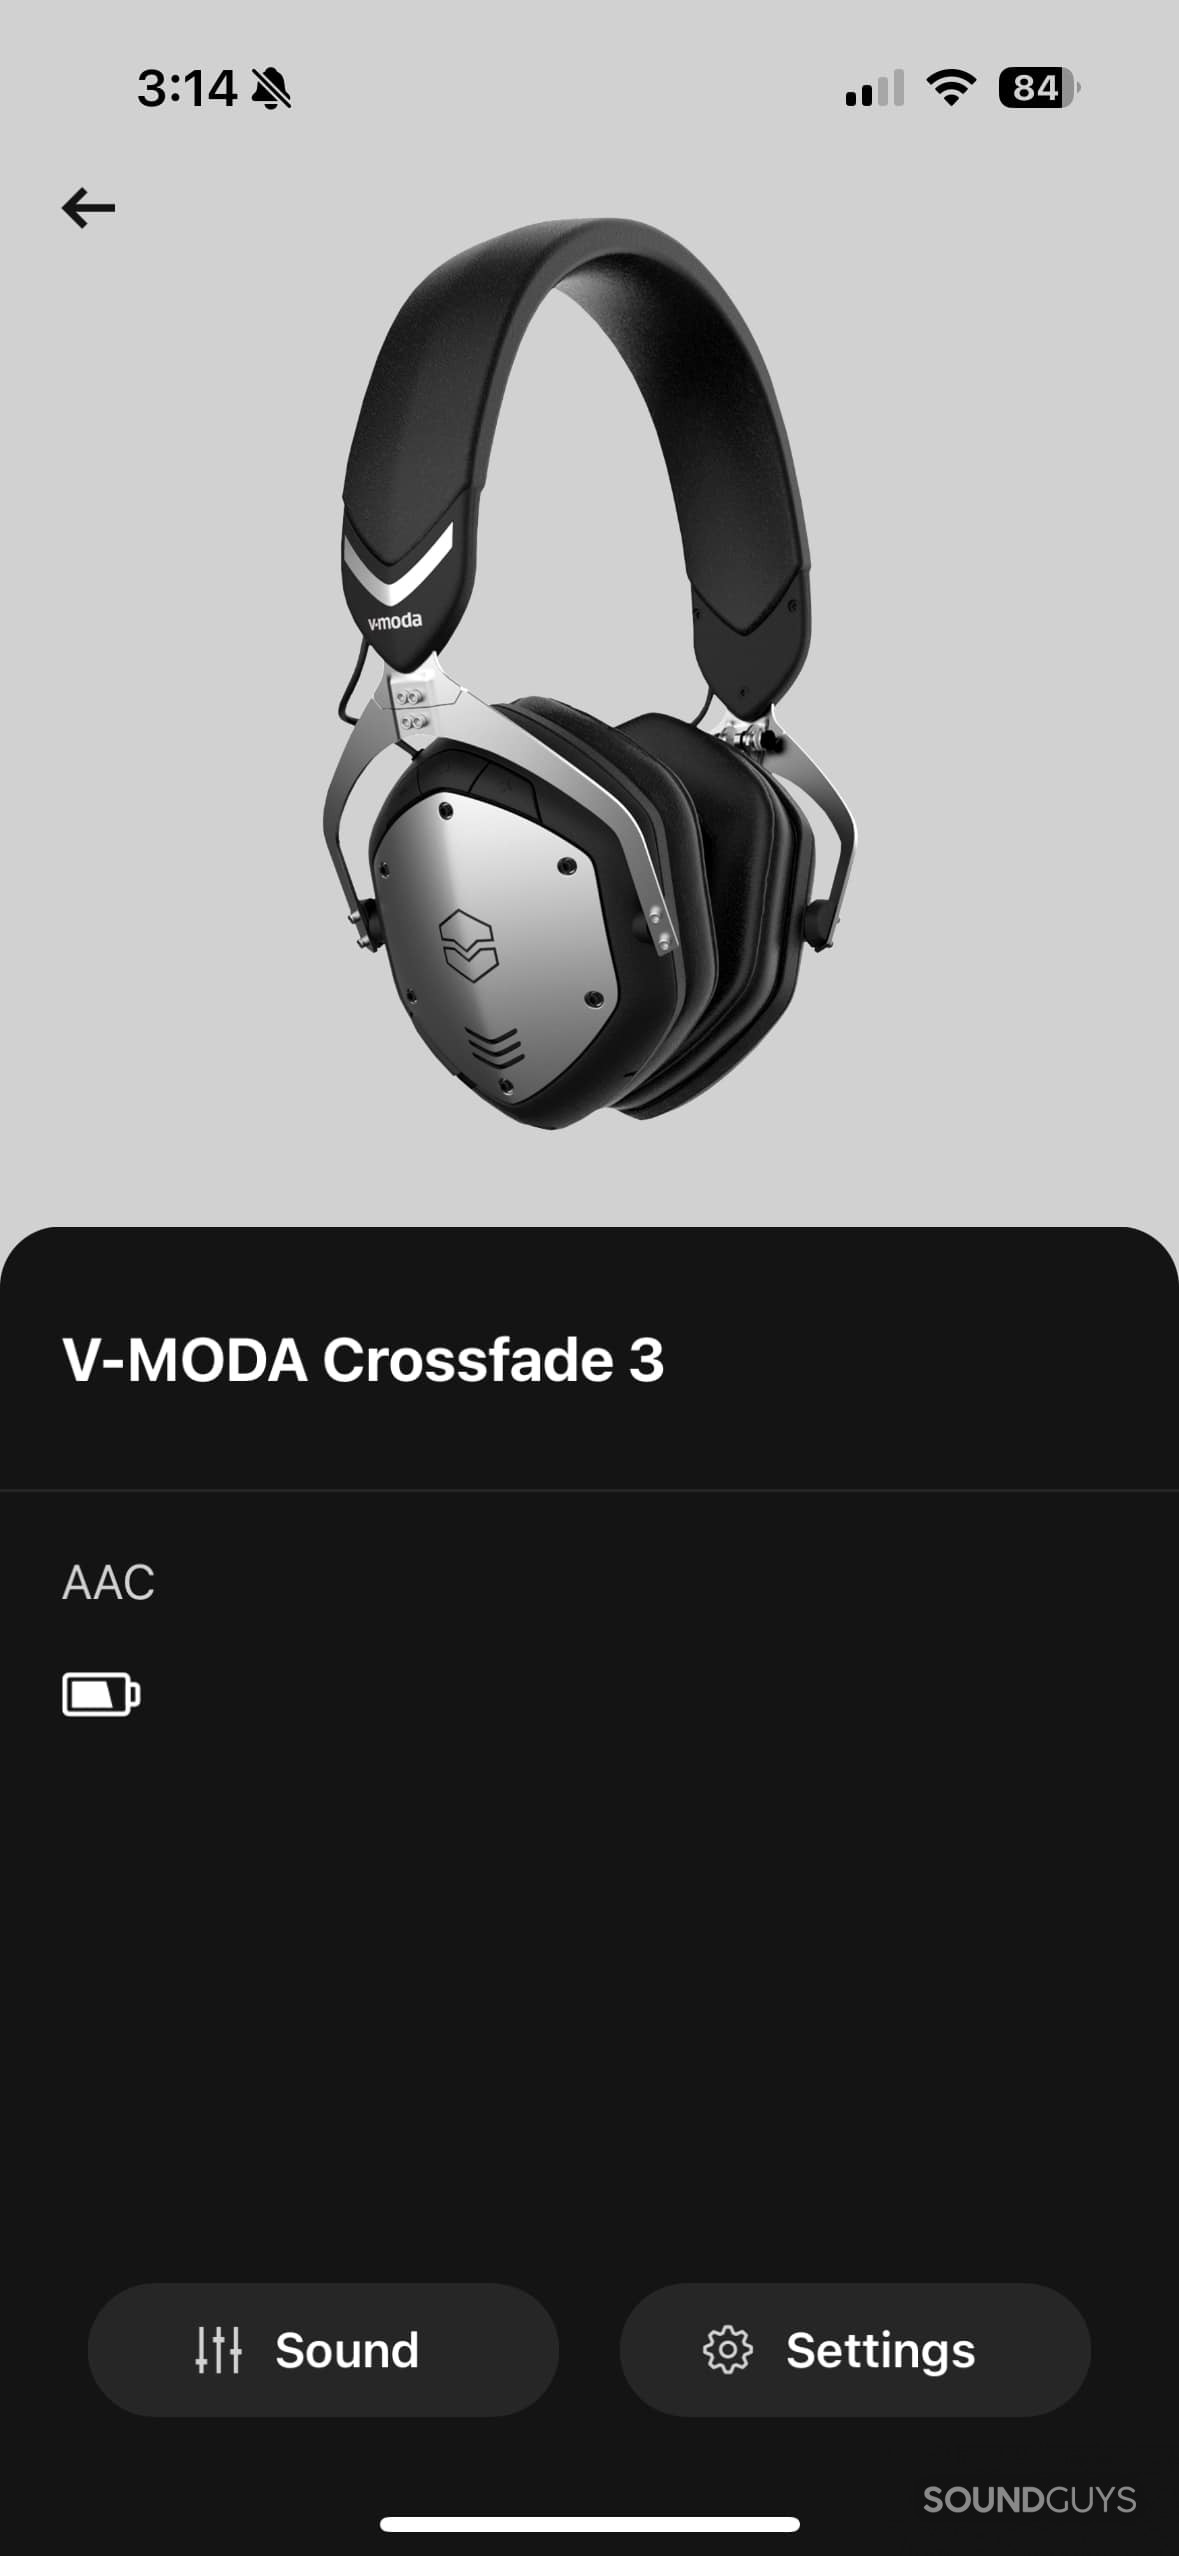 A screenshot of the V-MODA Crossfade Wireless 3 headphone editor app showing codec and battery life.